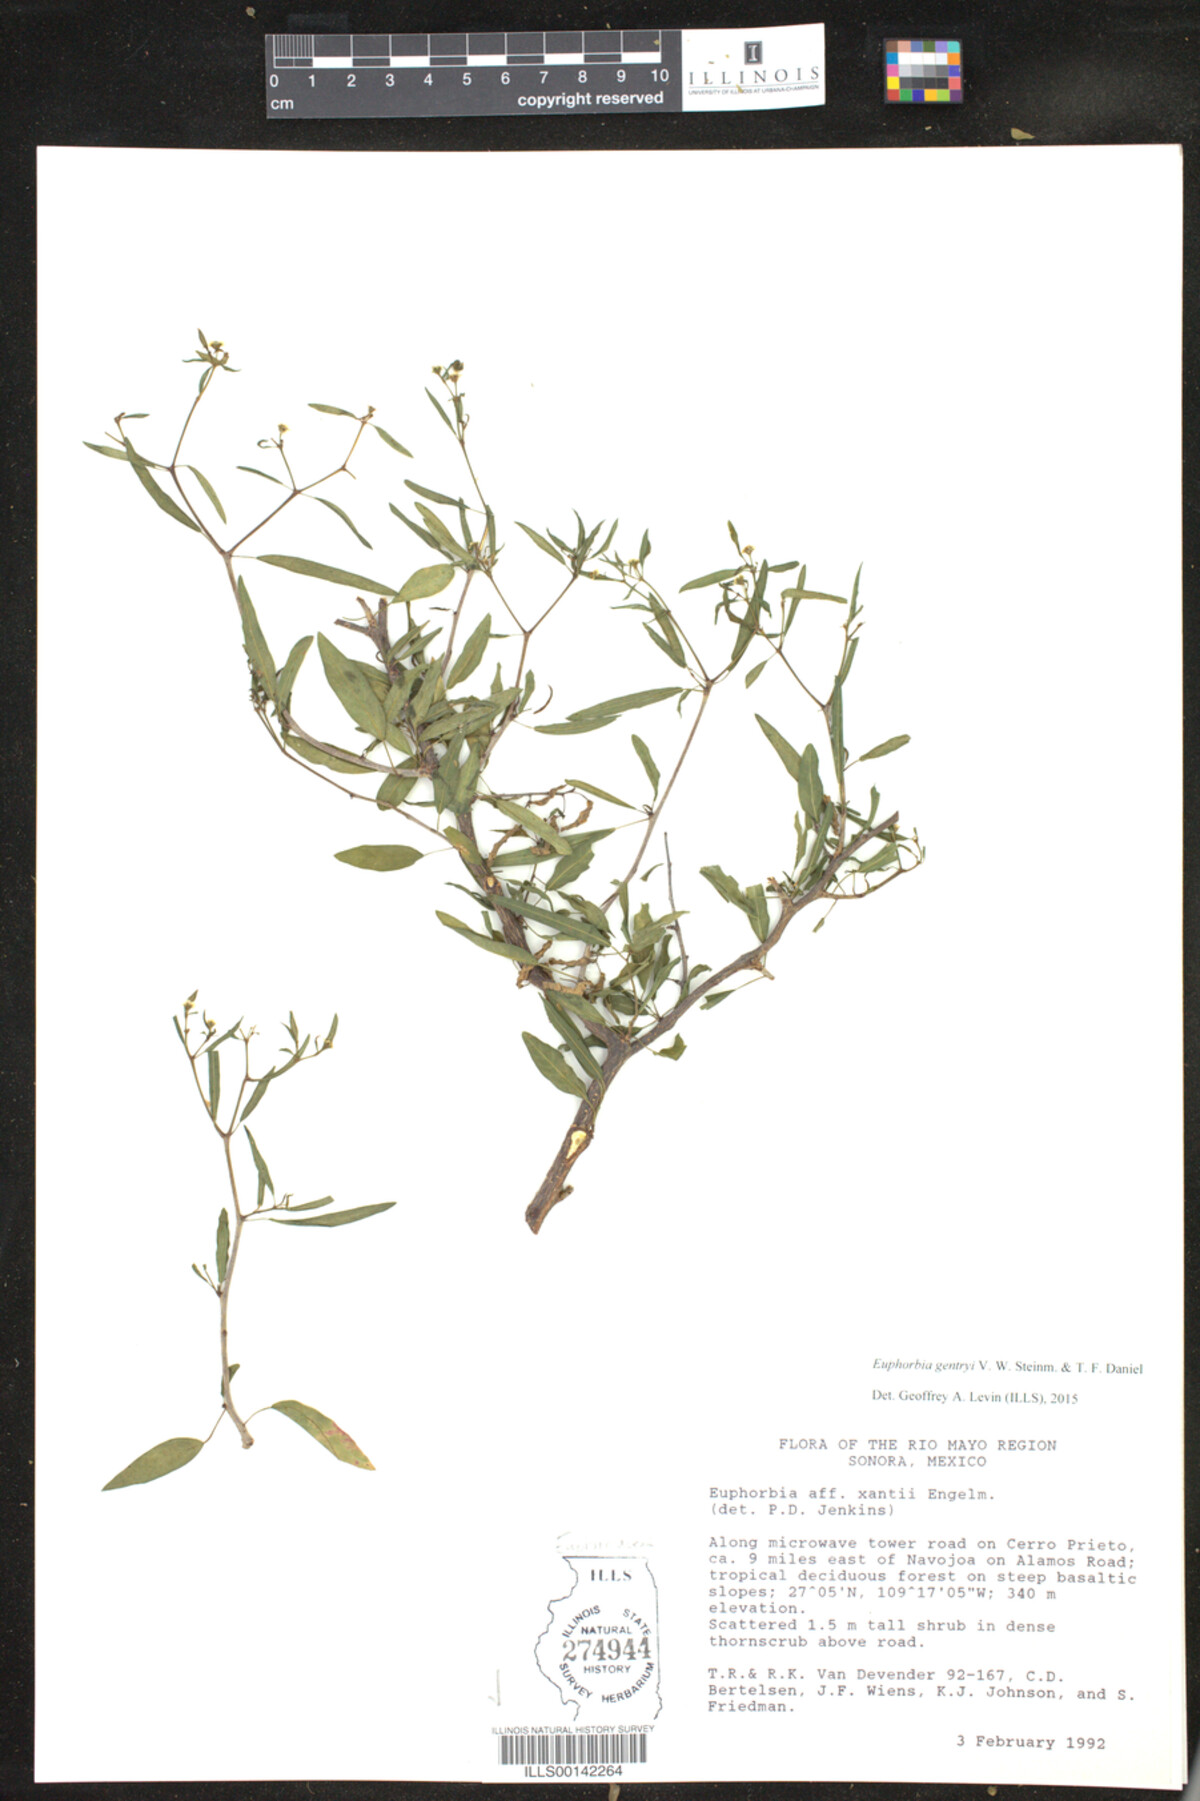 Euphorbia gentryi image